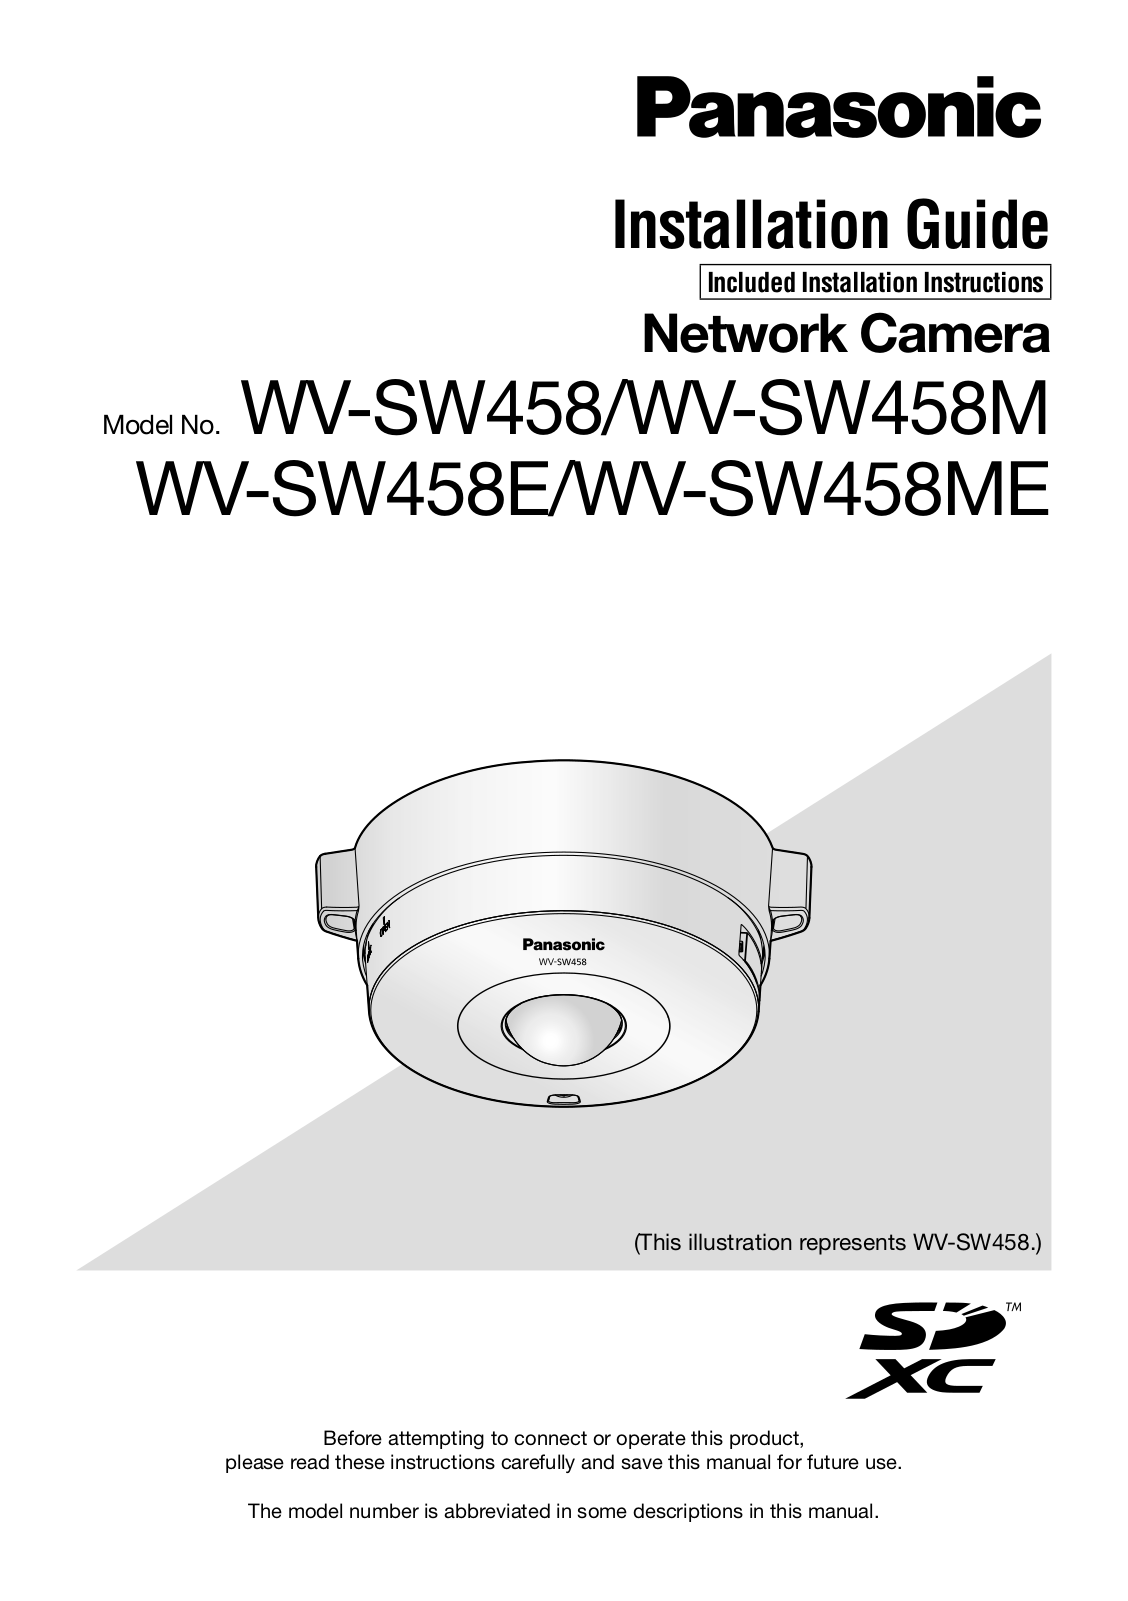 Panasonic WV-SW458M Installation Guide